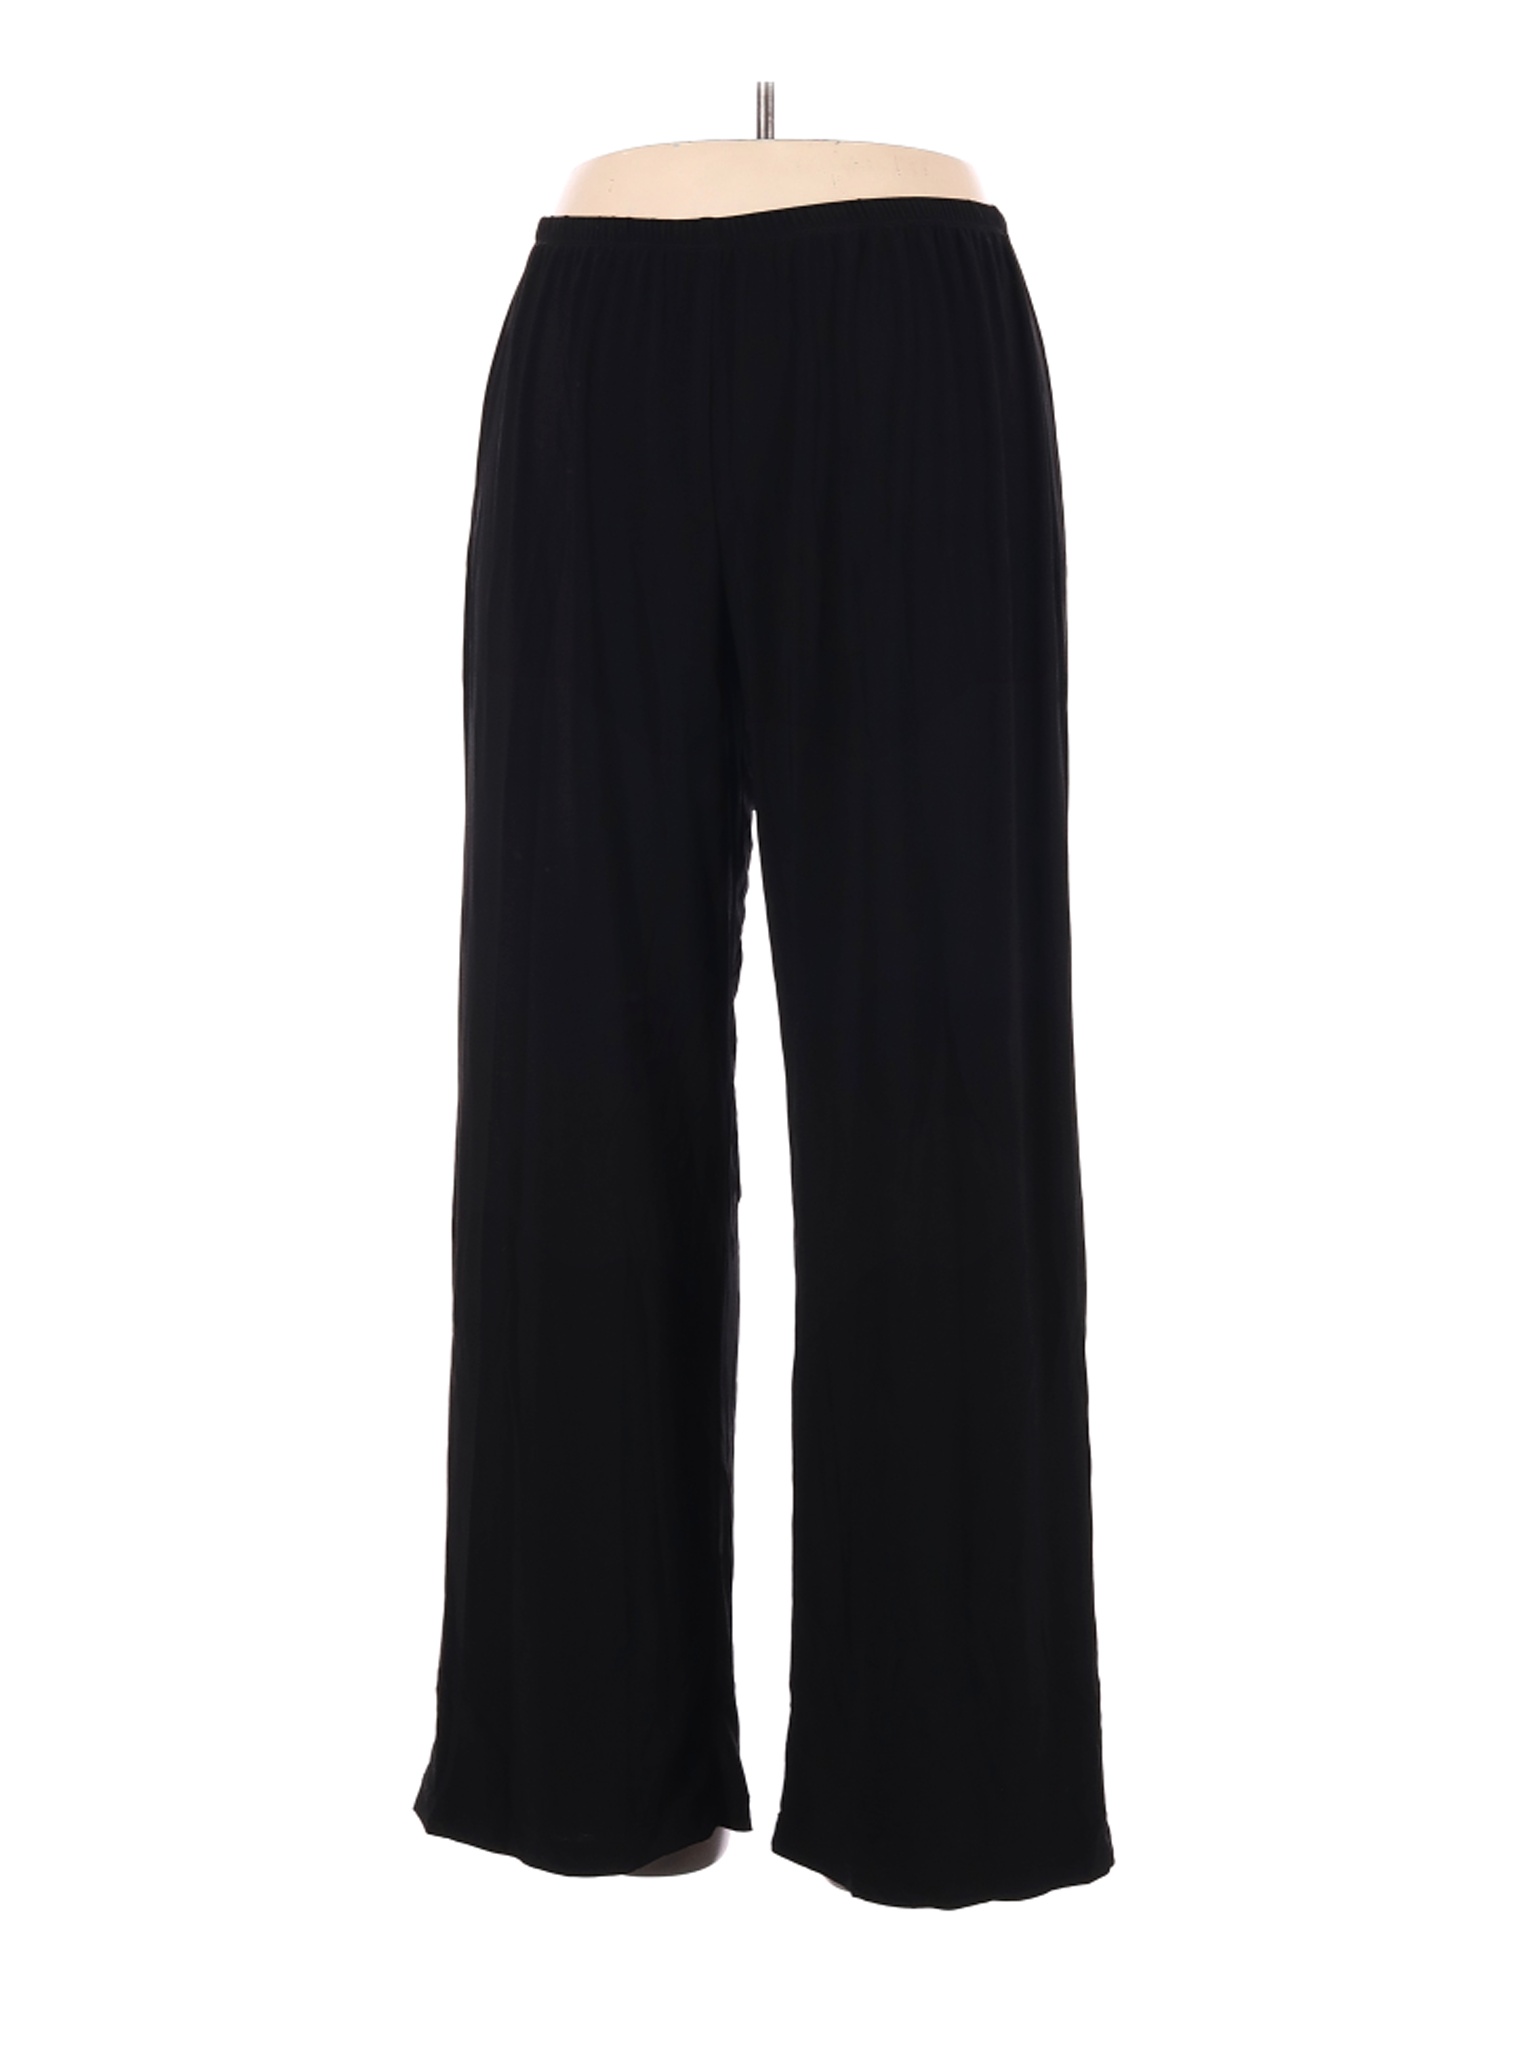 Unbranded Women Black Casual Pants 16 | eBay